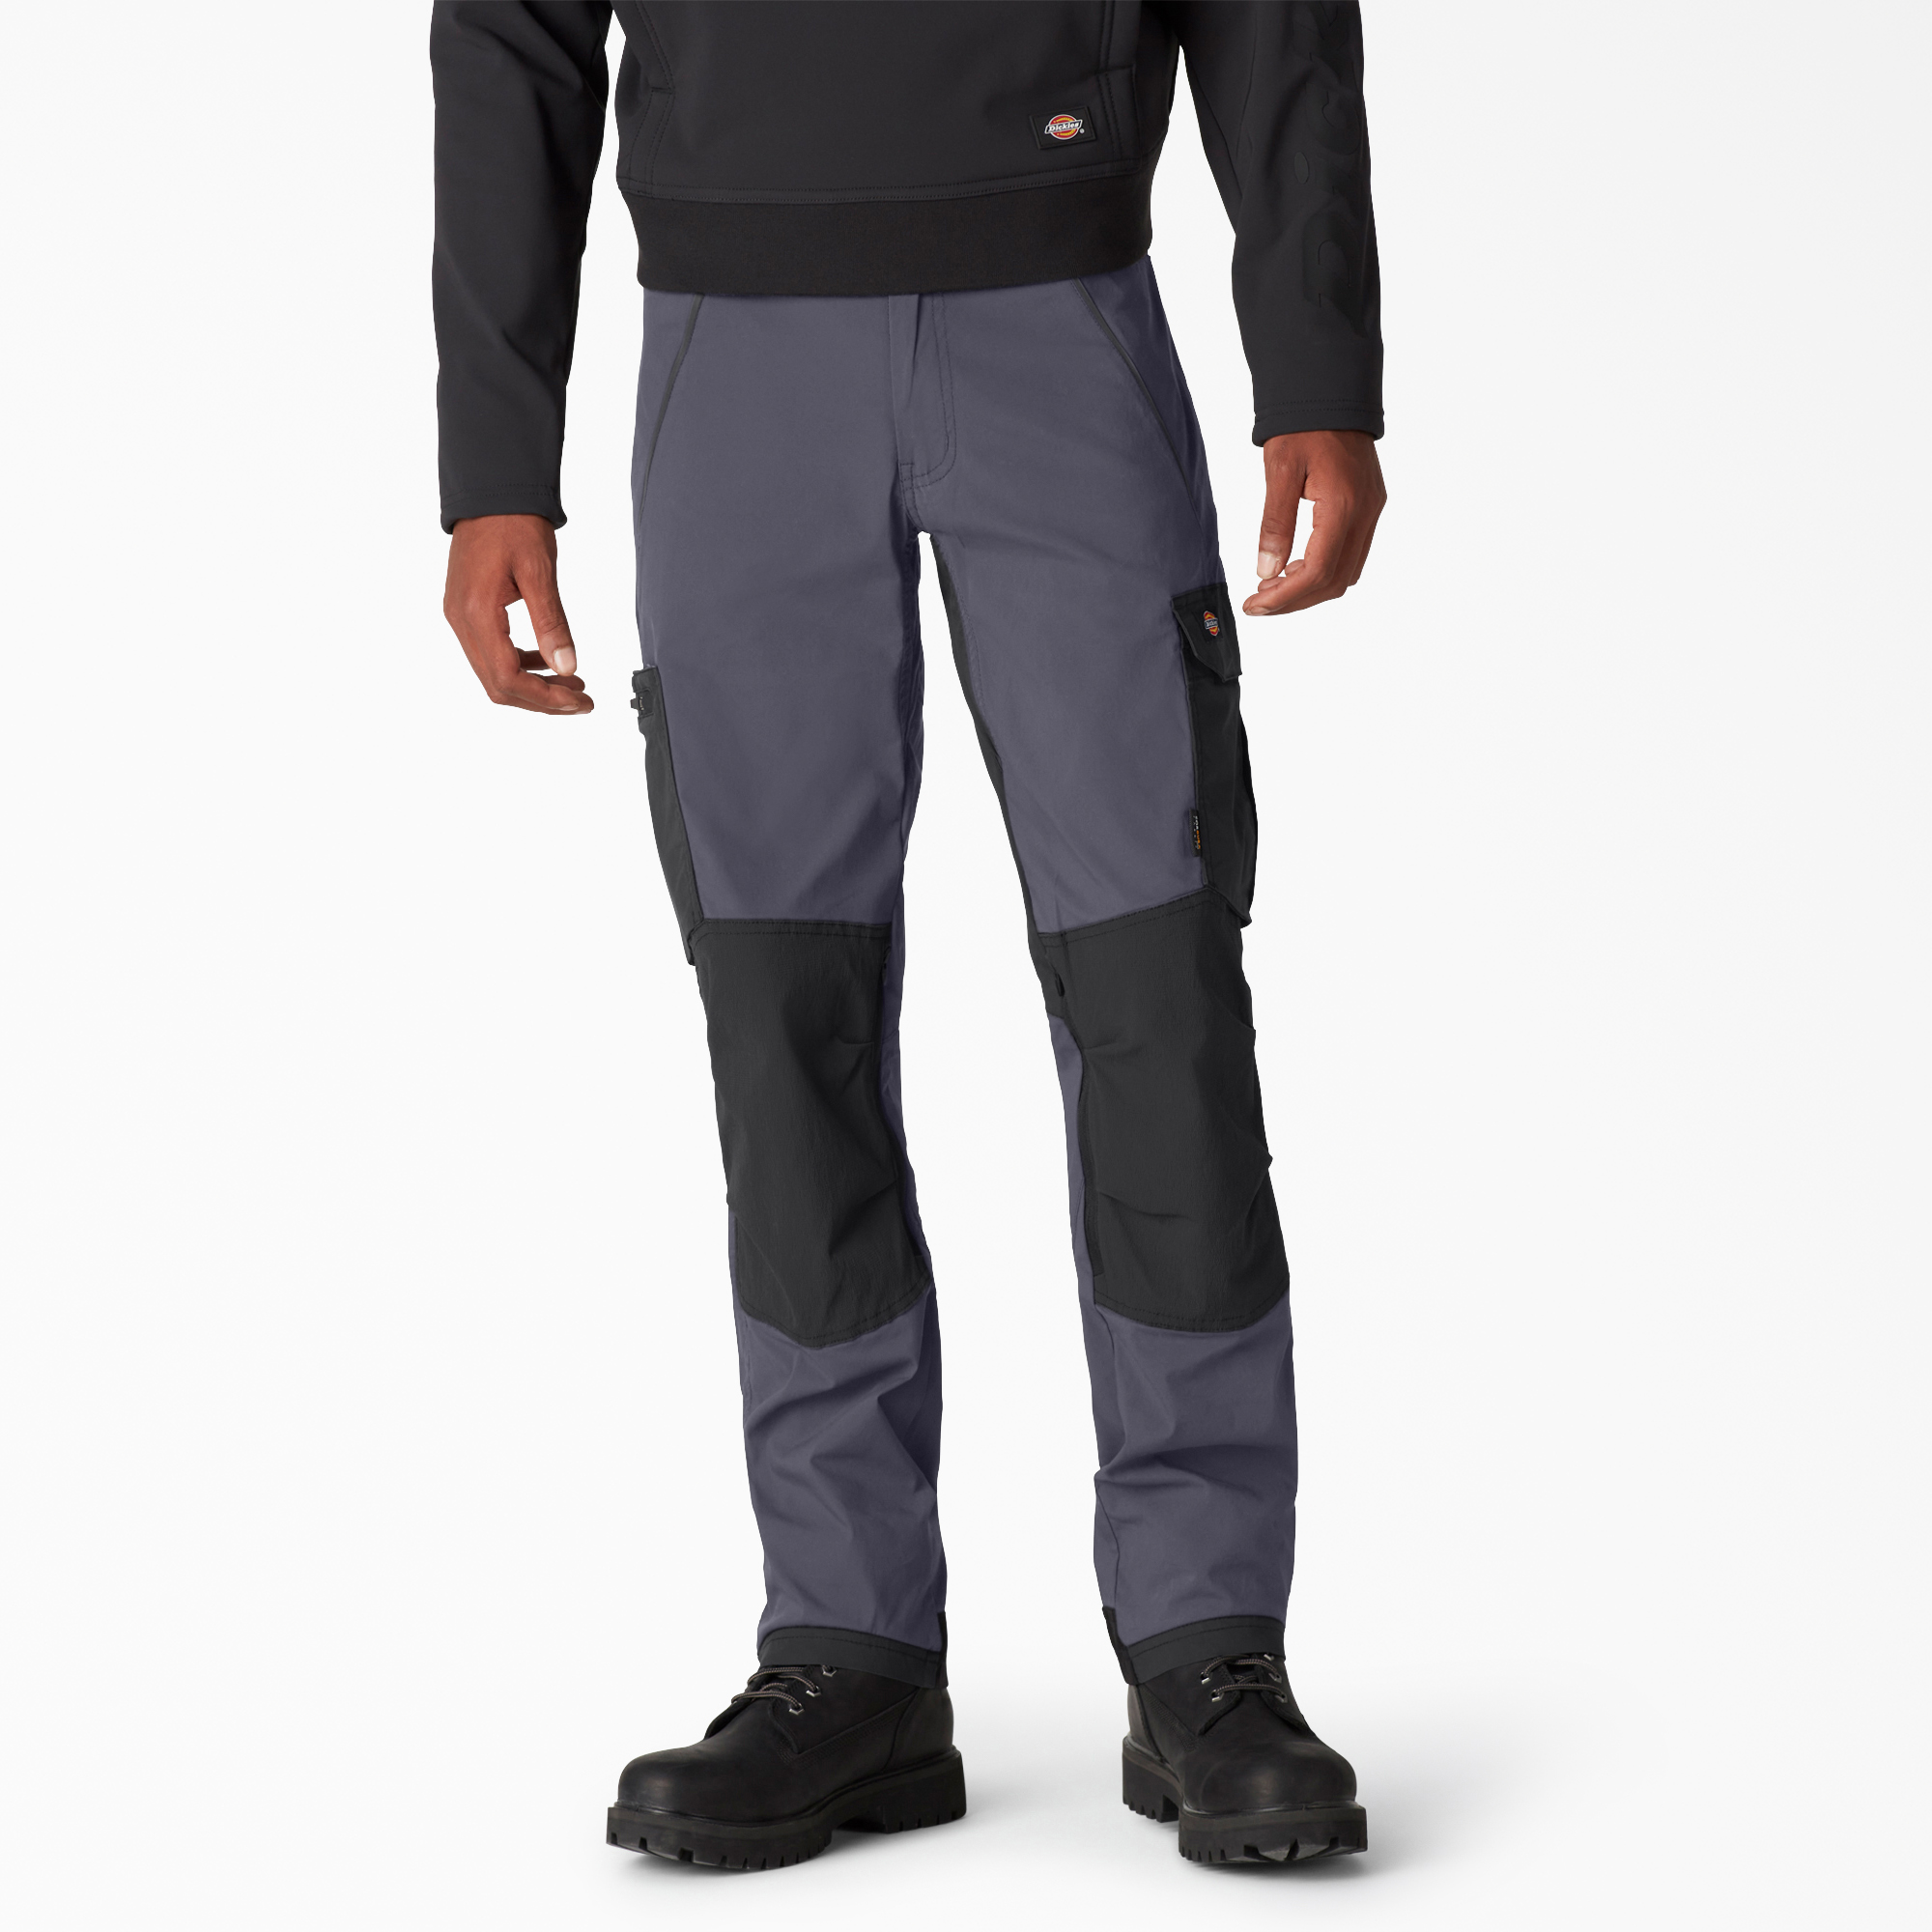 FLEX Cooling Lightweight Pants - Grey Black (UEB)